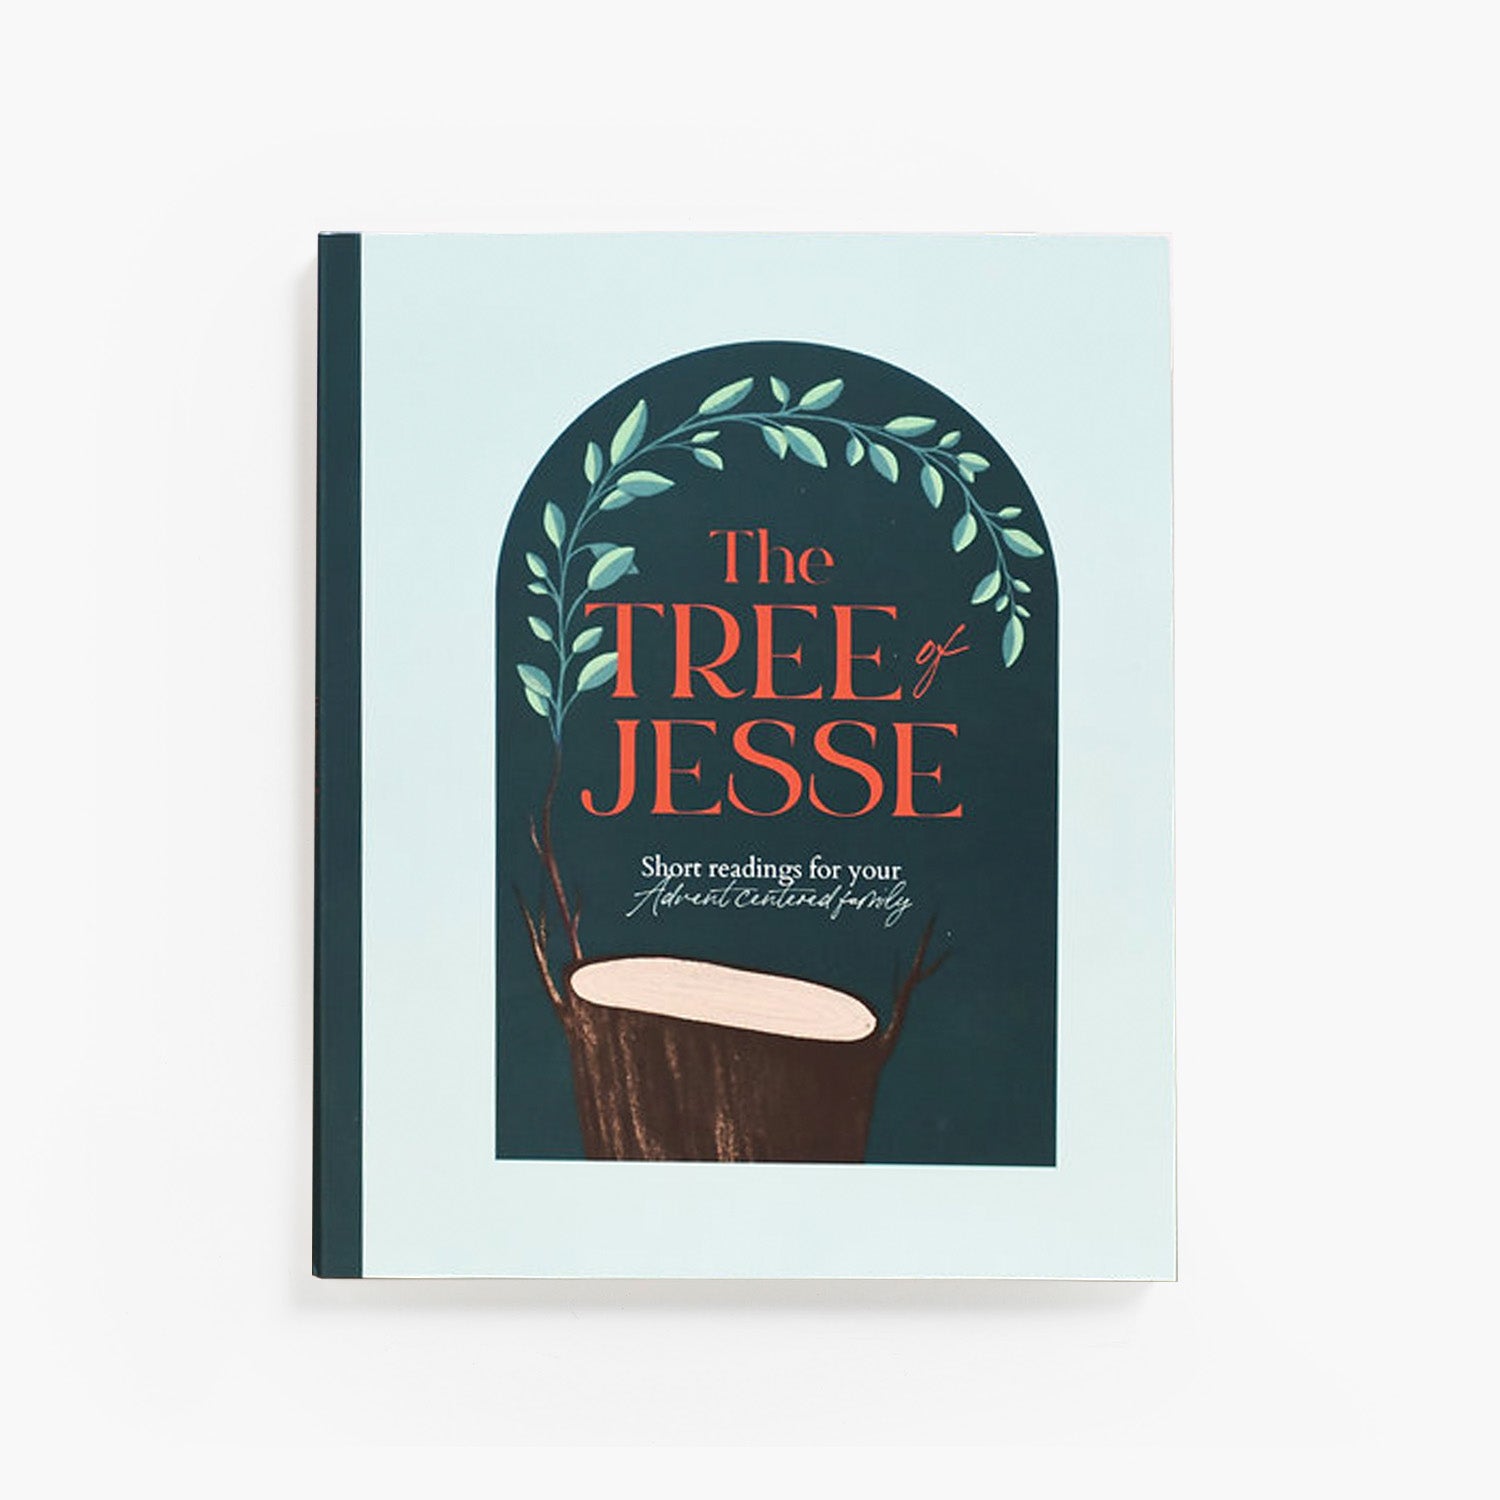 Jesse Tree Pulpboard Ornaments and Book